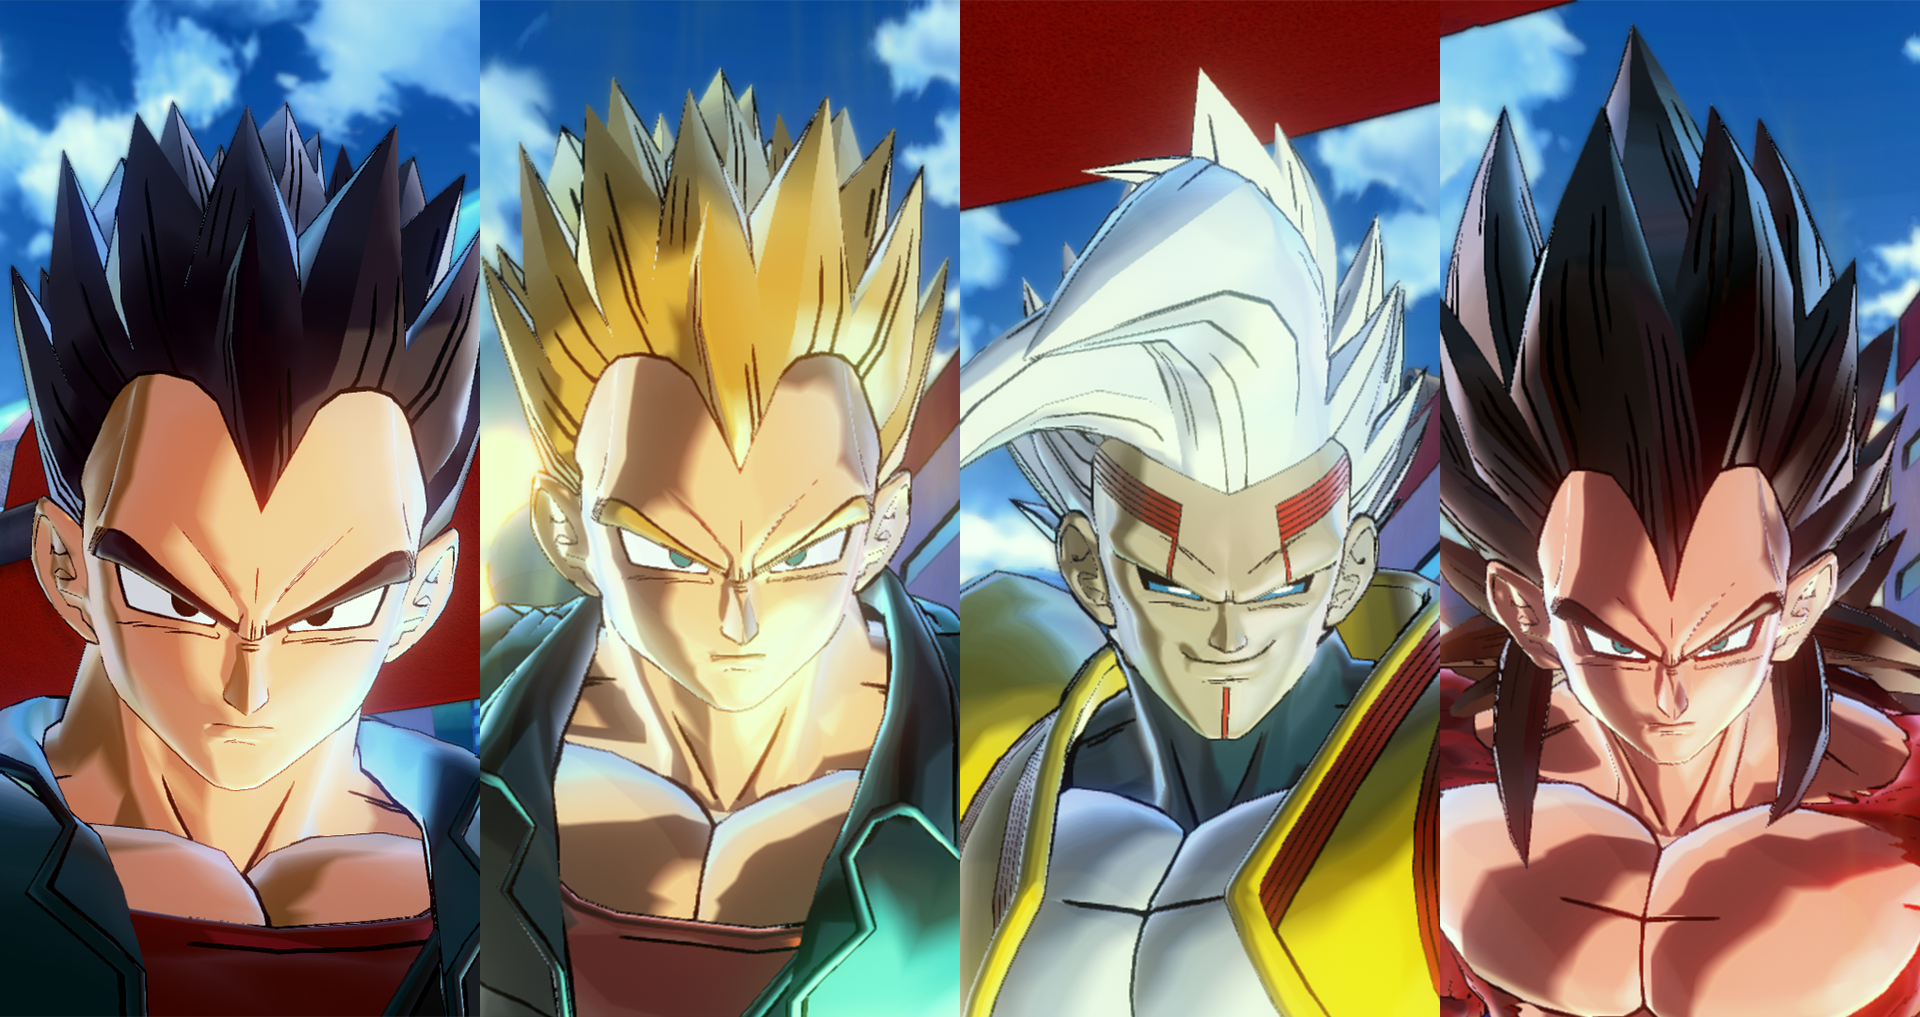 SLO on X: My Vegeta (GT) moveset for Xenoverse 2: - Shining Rage Attack  (Super) - Maximum Final Flash (Ultimate) - Super Saiyan + Super Saiyan 3  (Awoken)  / X